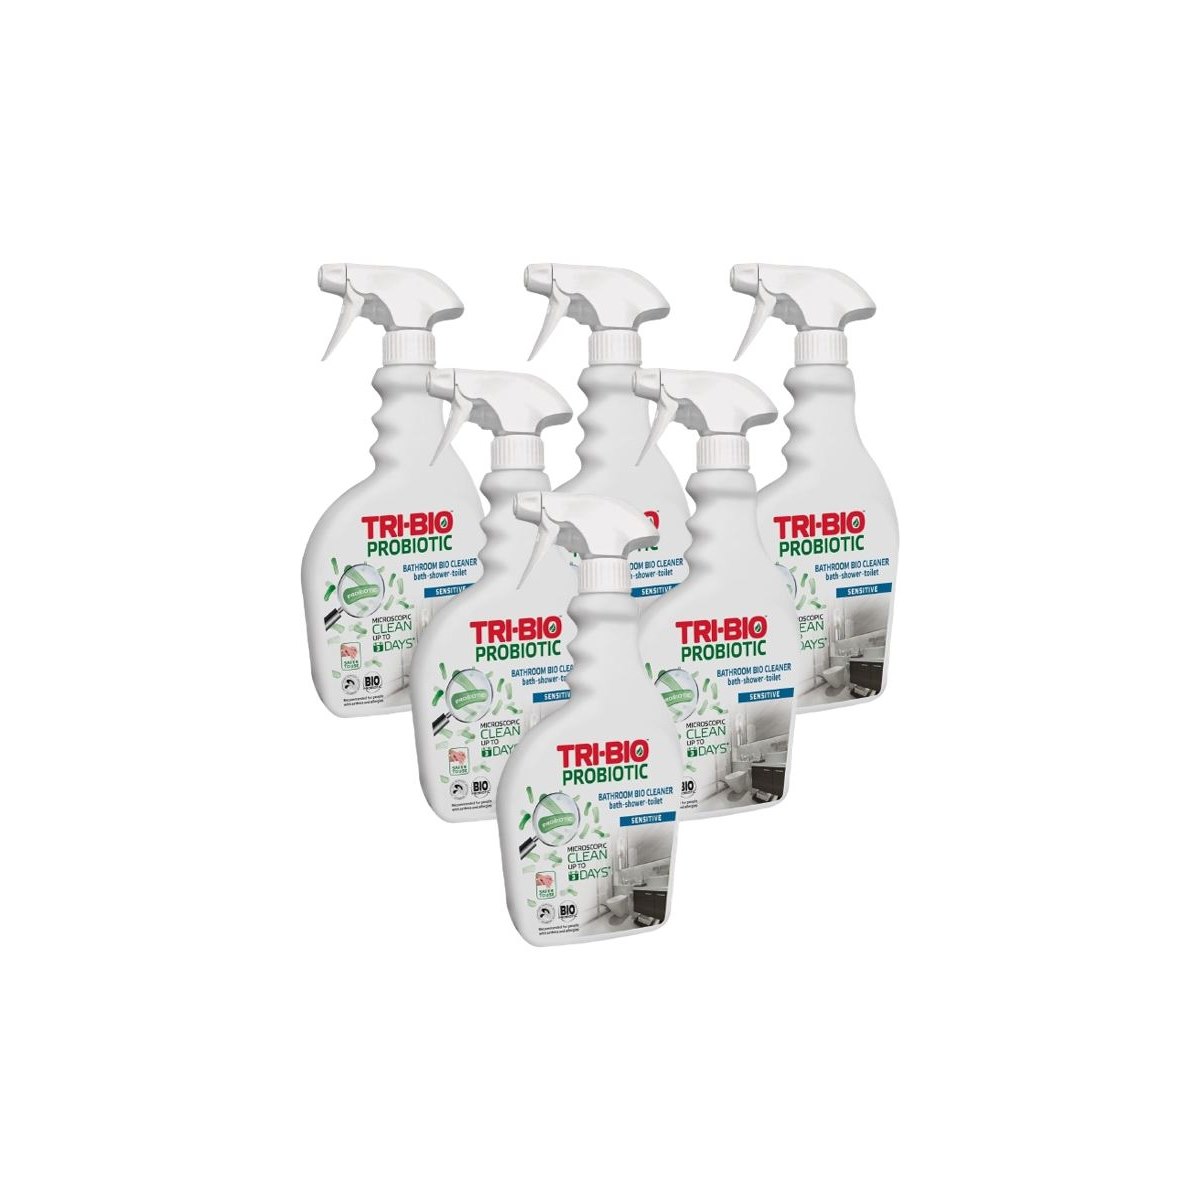 Case of 6 x Tri-Bio Probiotic Bathroom Bio Cleaner Spray 420ml